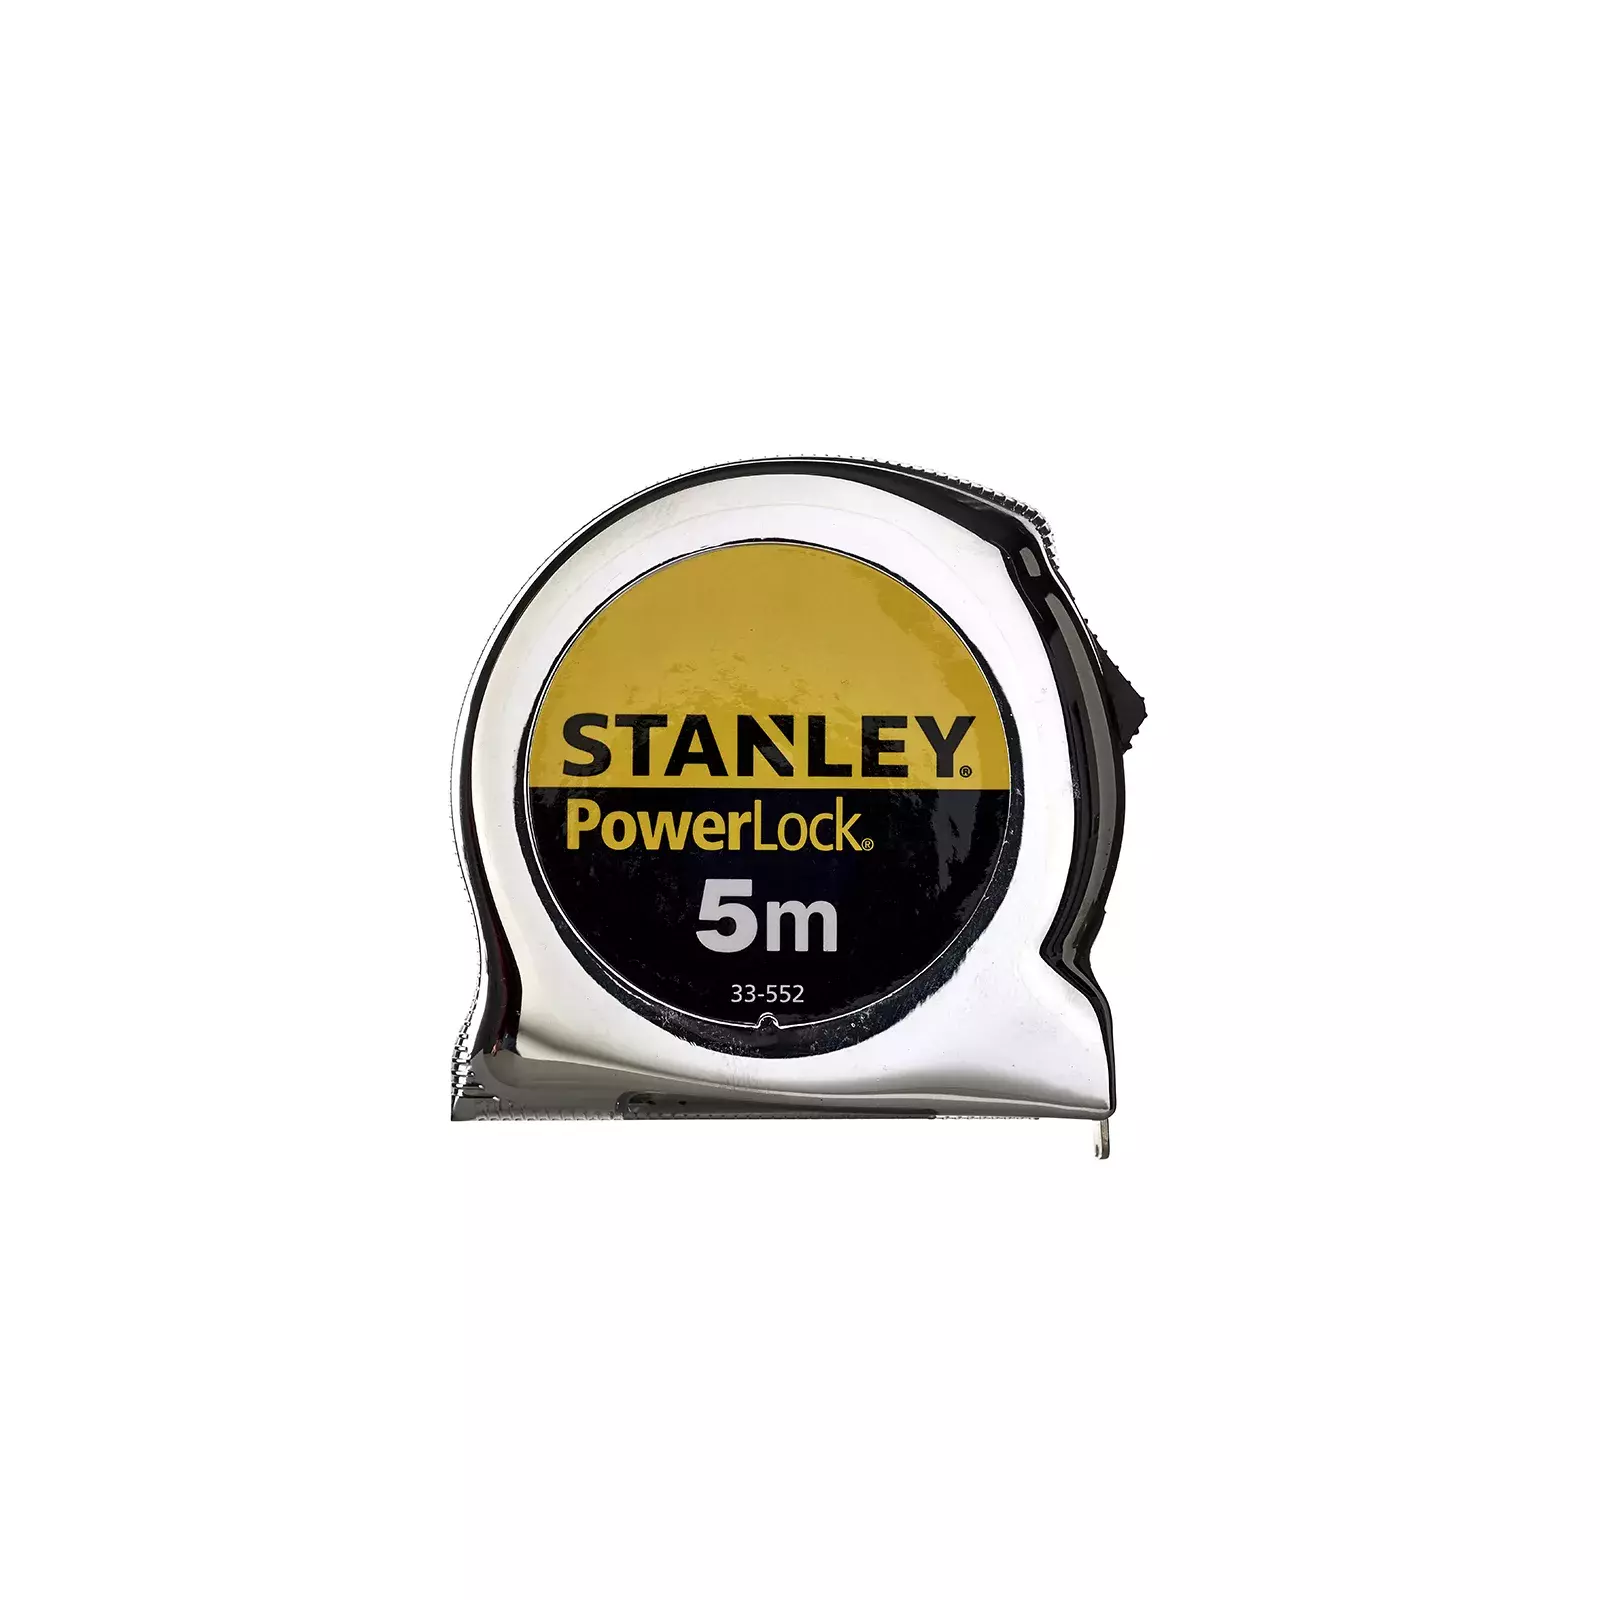 STANLEY 0-33-552 Powerlock Tape, 5m Metric Only